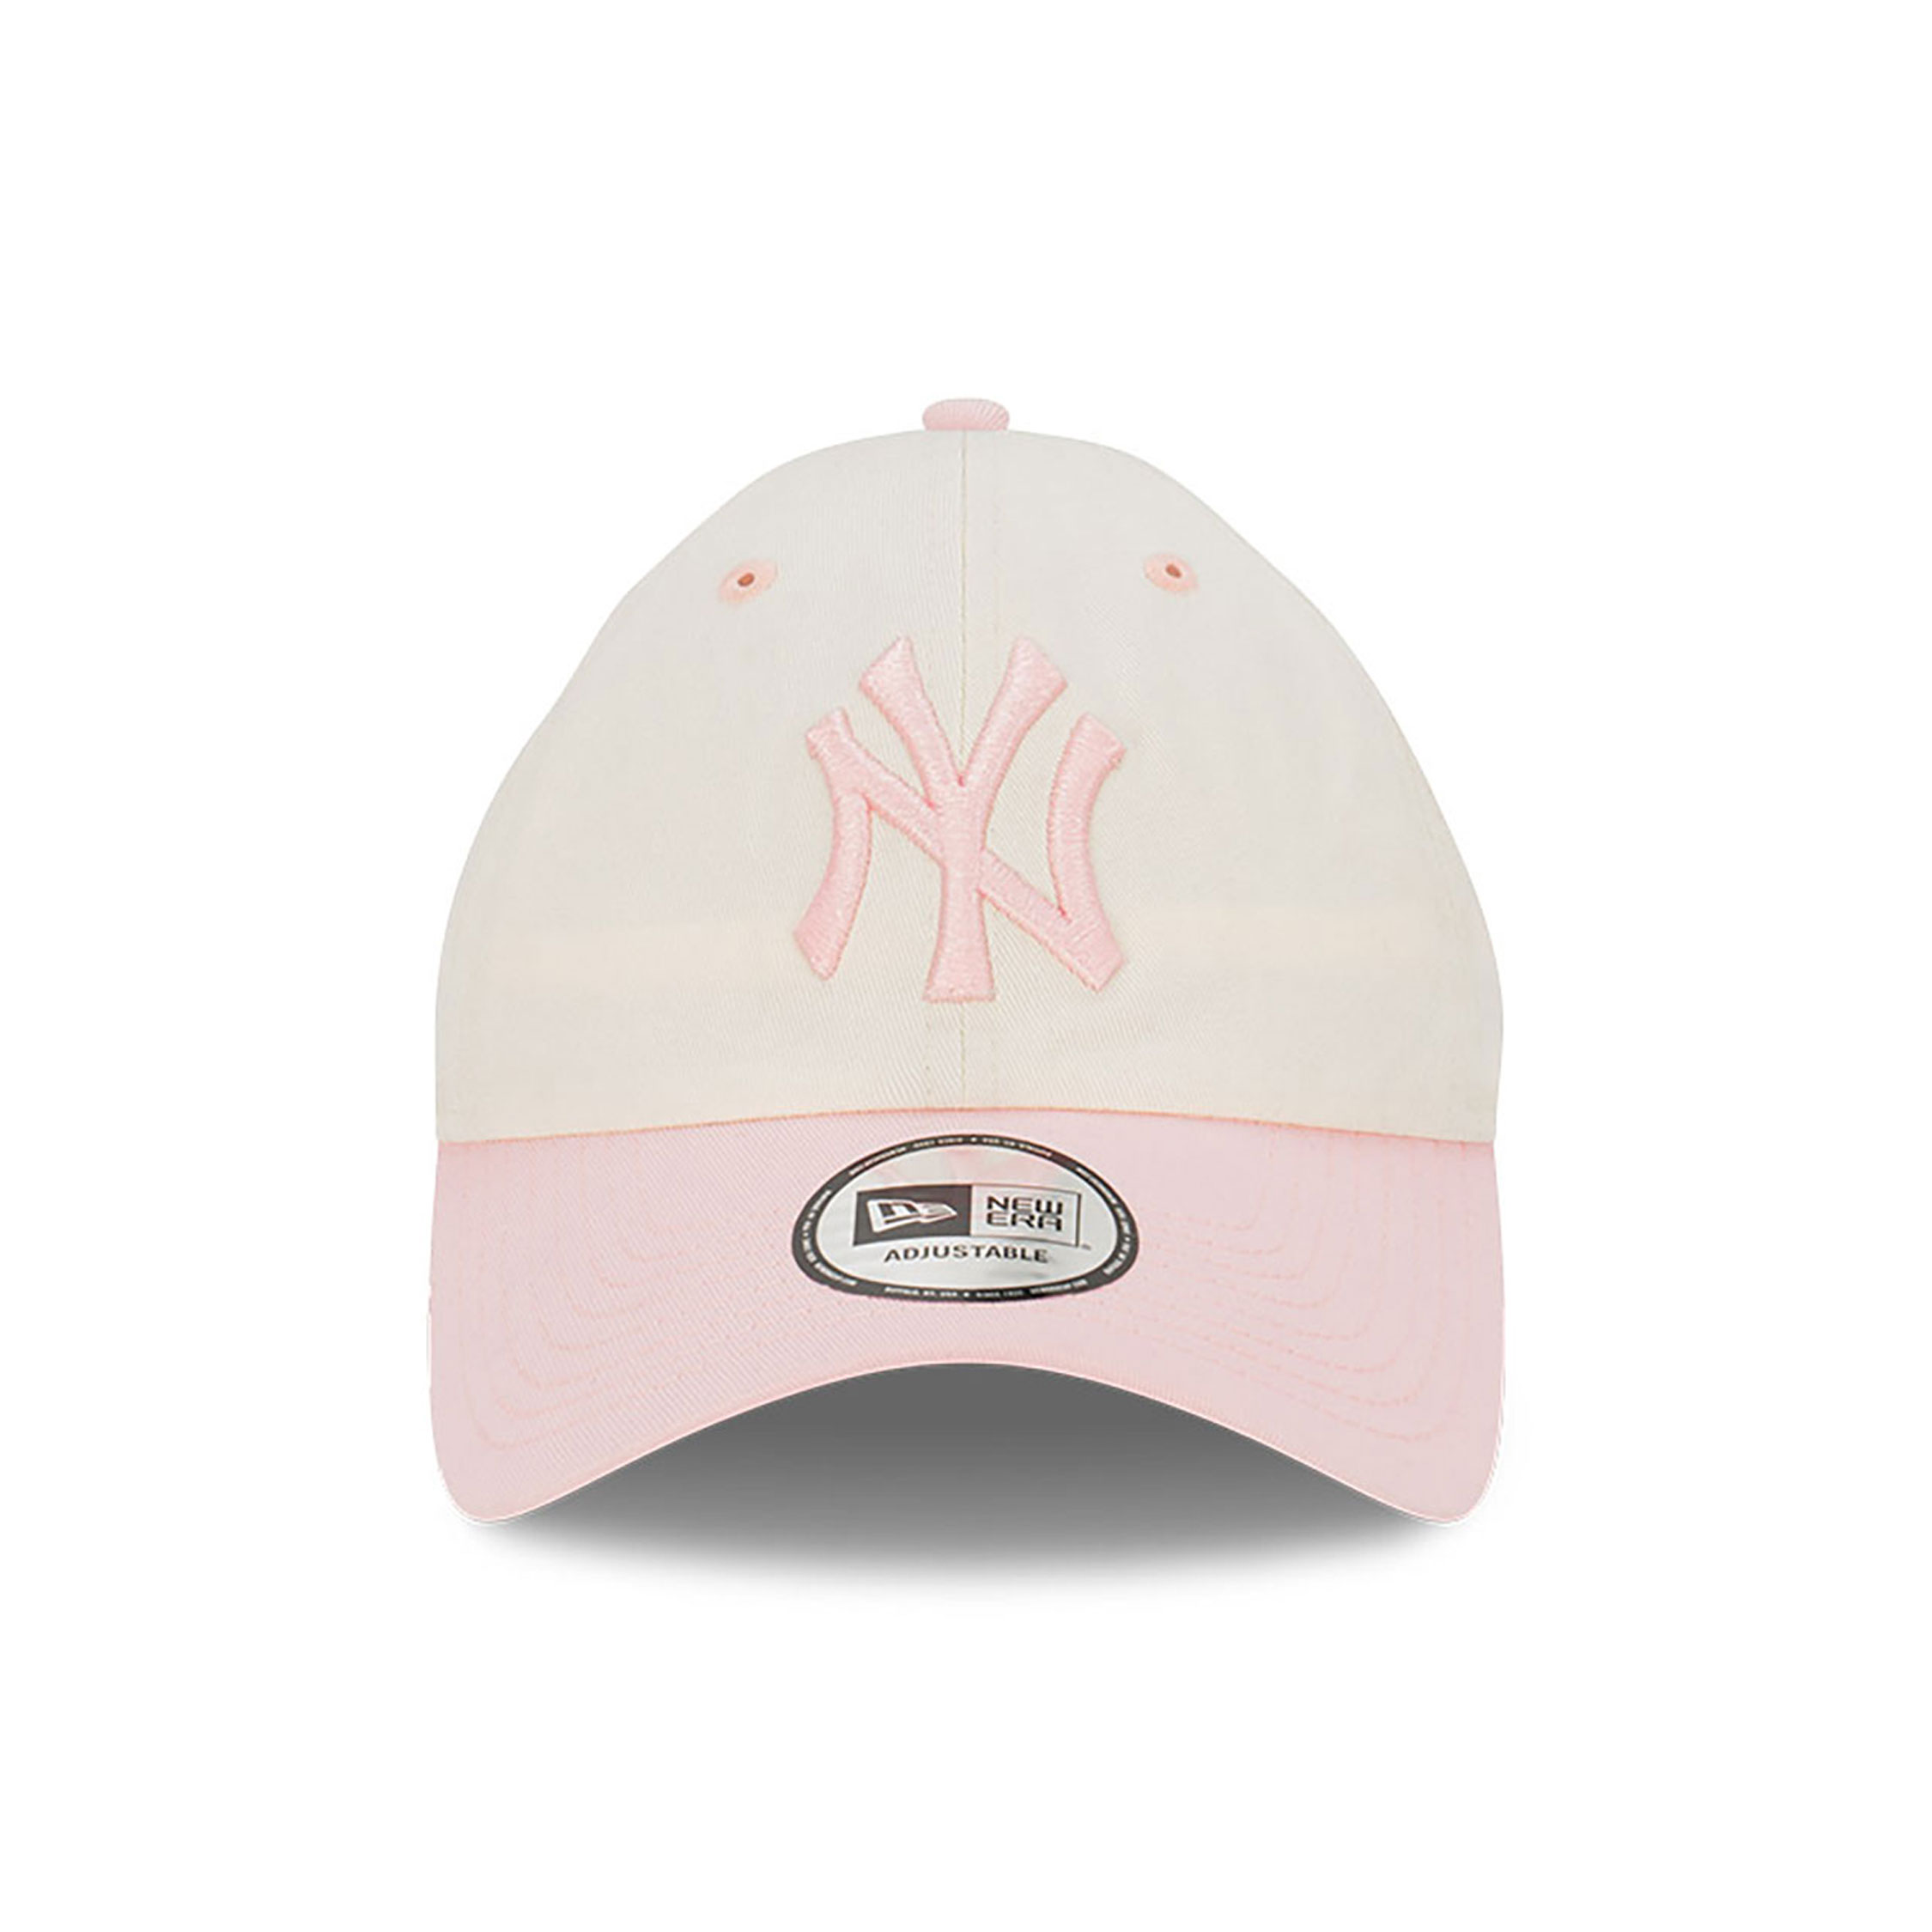 New York Yankees Seasonal Two-Tonal Light Beige and Light Pink Casual Classic Adjustable Cap